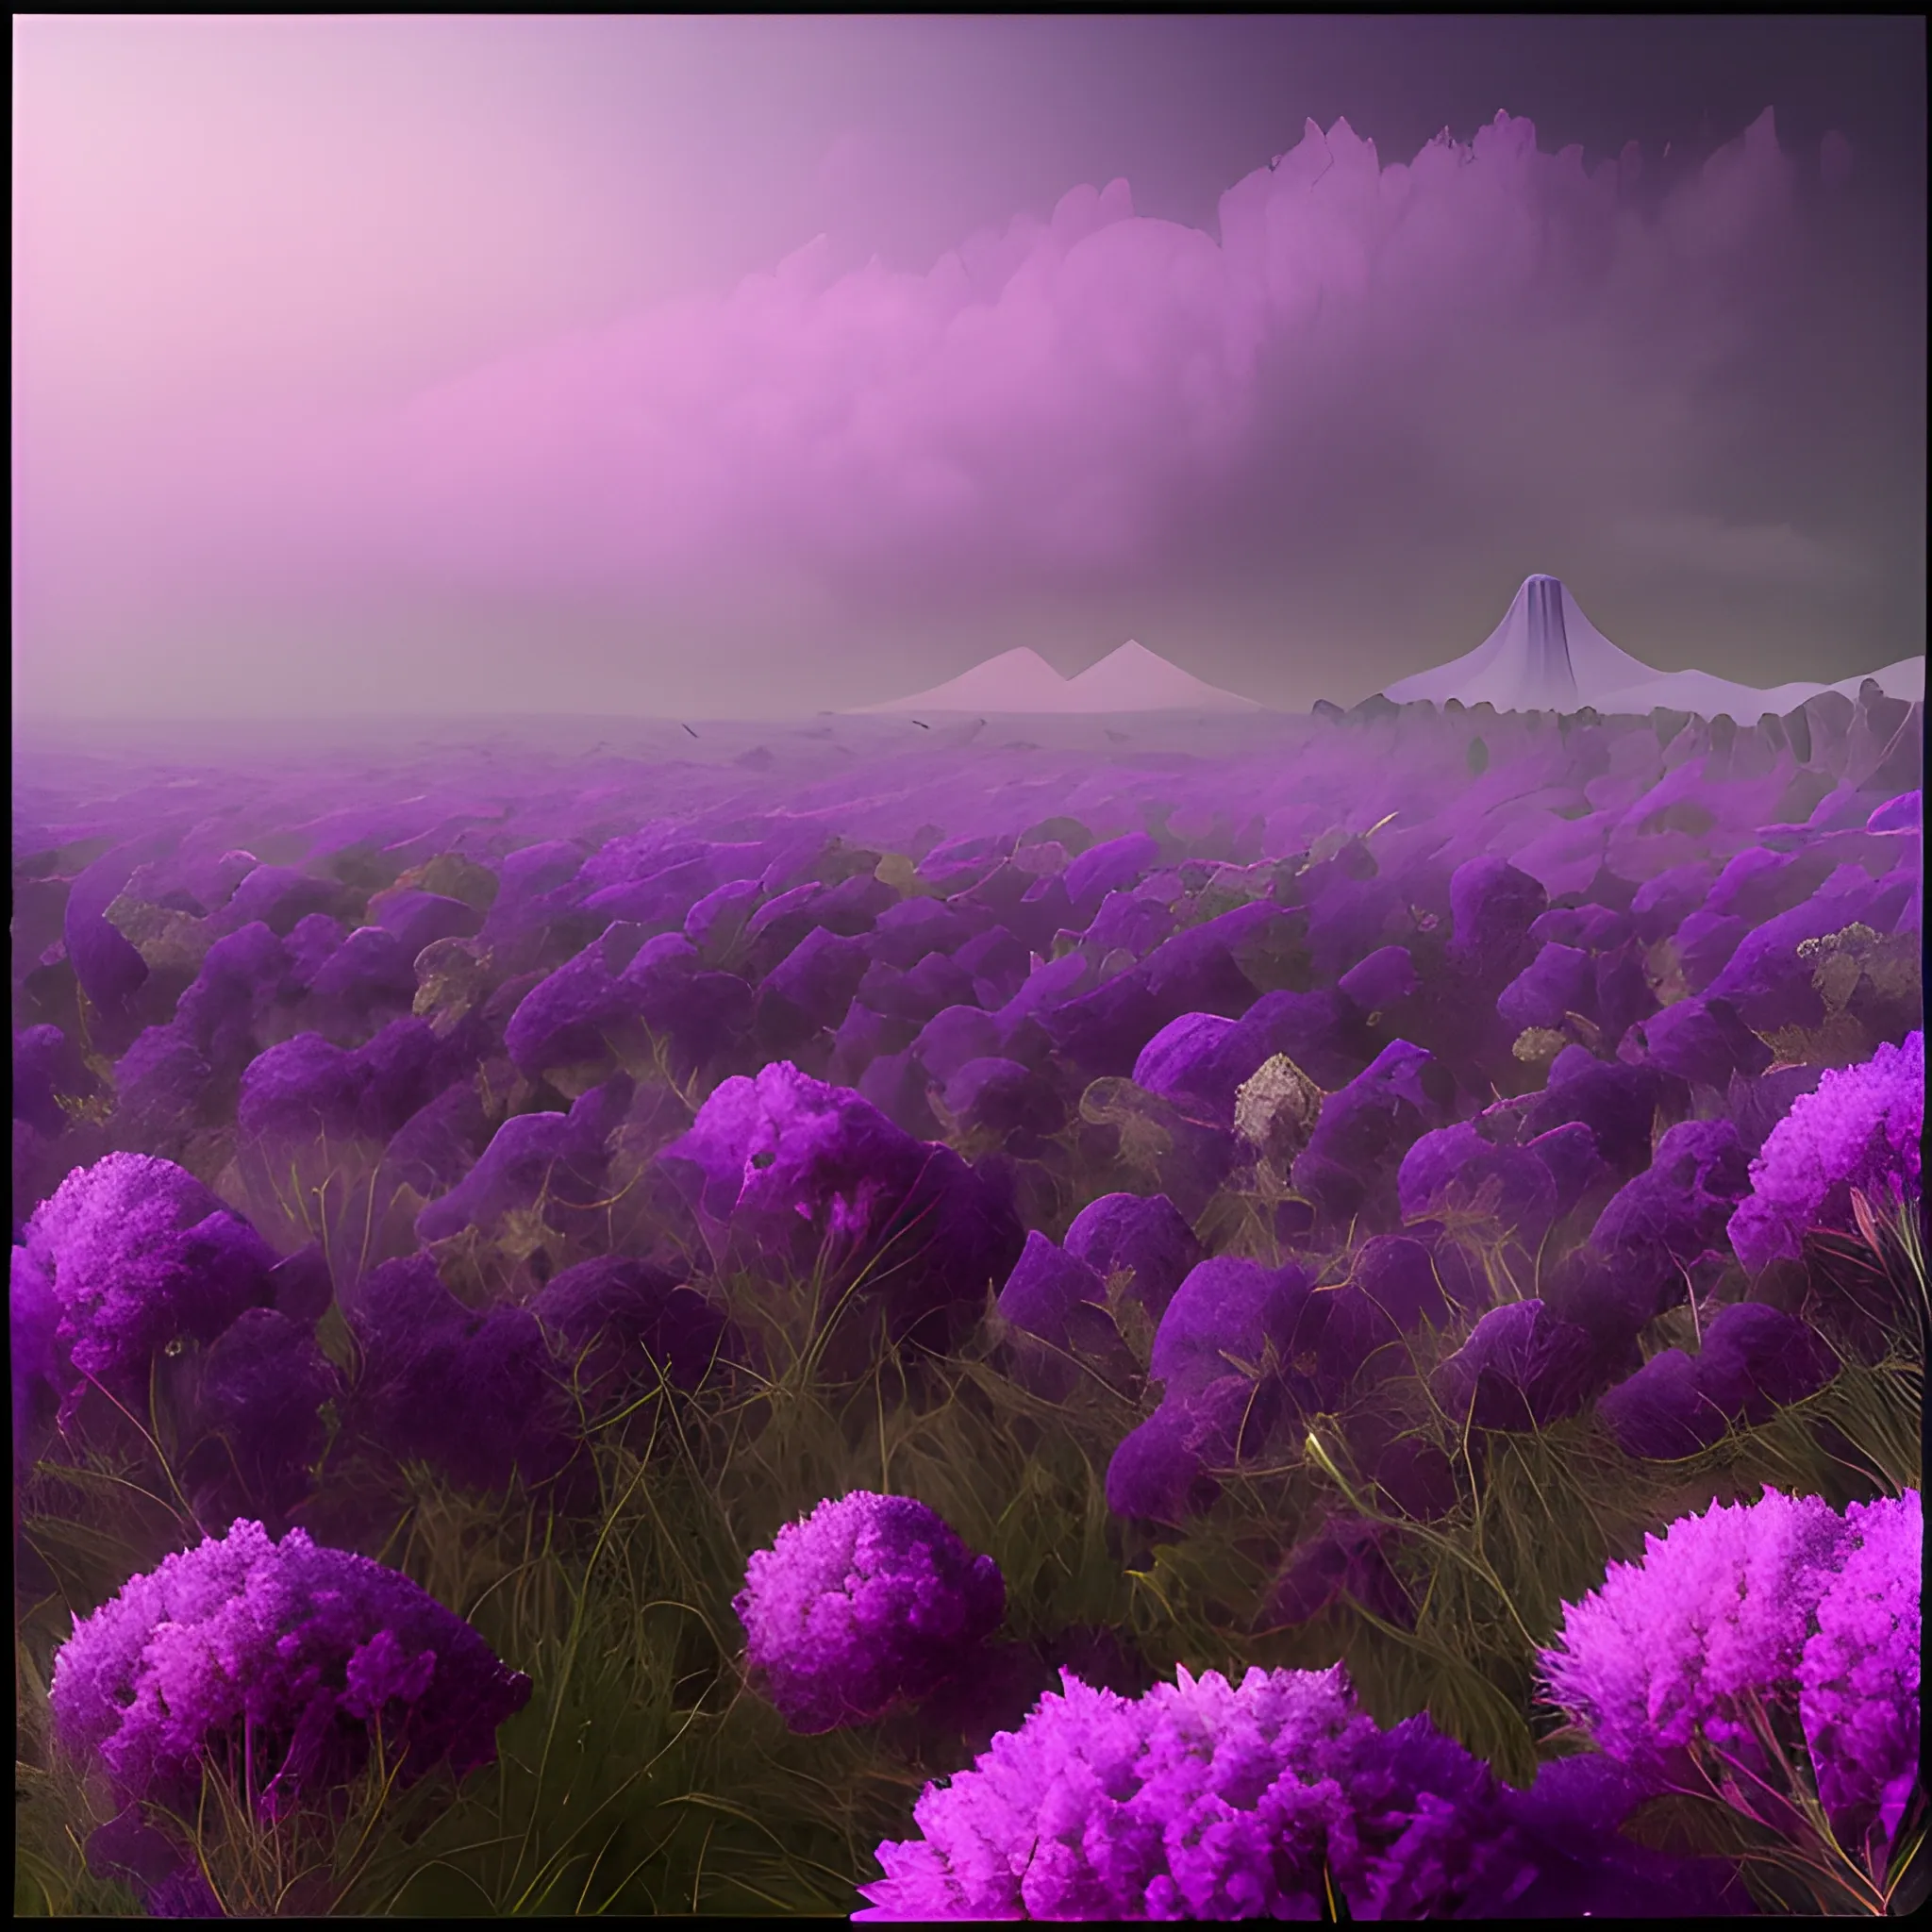 rfktrstyle 420 purple haze best quality,4k,8k,highres,masterpiece:1.2,ultra-detailed,realistic,photorealistic:1.37,purple,purple tones,ethereal,hazy,smoky,mystical,dreamy,psychedelic,purple haze